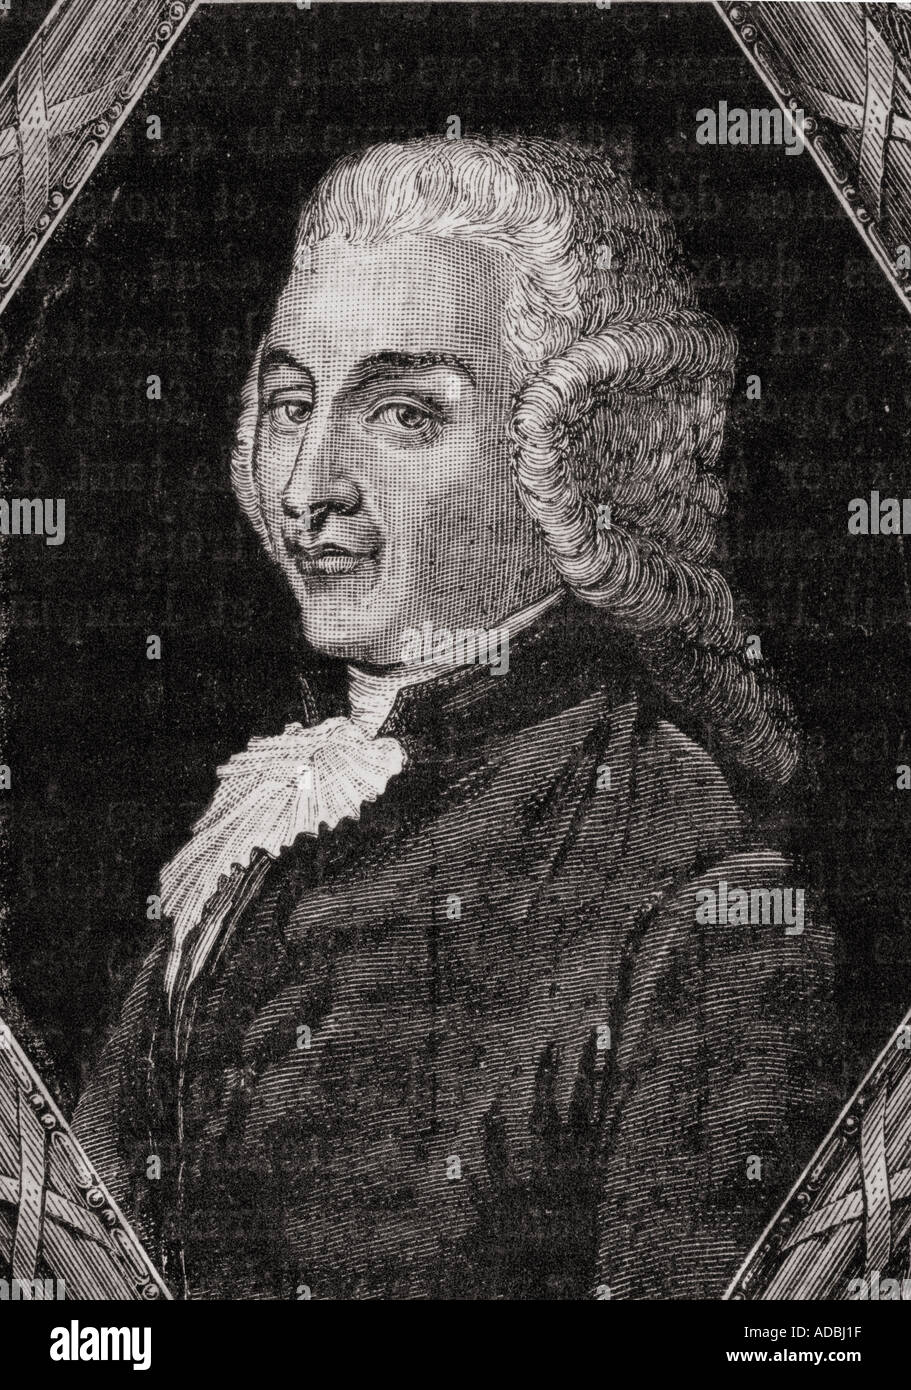 Joseph Ignace Guillotin, 1738 - 1814.  French physician. Stock Photo